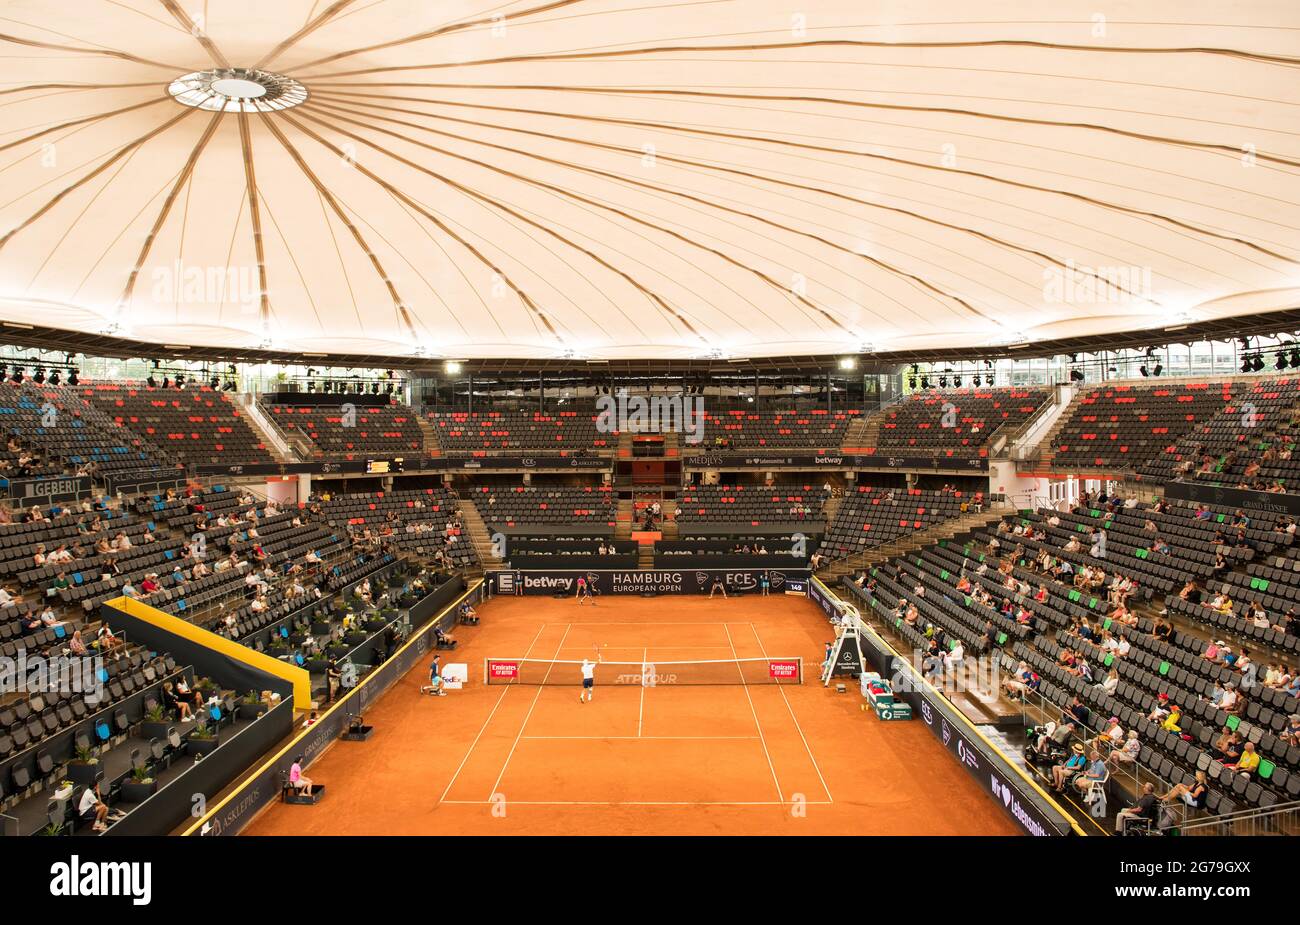 Hamburg, Germany. 12th July, 2021. Tennis: ATP Tour - Hamburg, Singles,  Men, 1st round at Stadion Am Rothenbaum. Moutet (France) - Baez  (Argentina). View of the Center Court. Credit: Daniel Bockwoldt/dpa/Daniel  Bockwoldt/dpa/Alamy